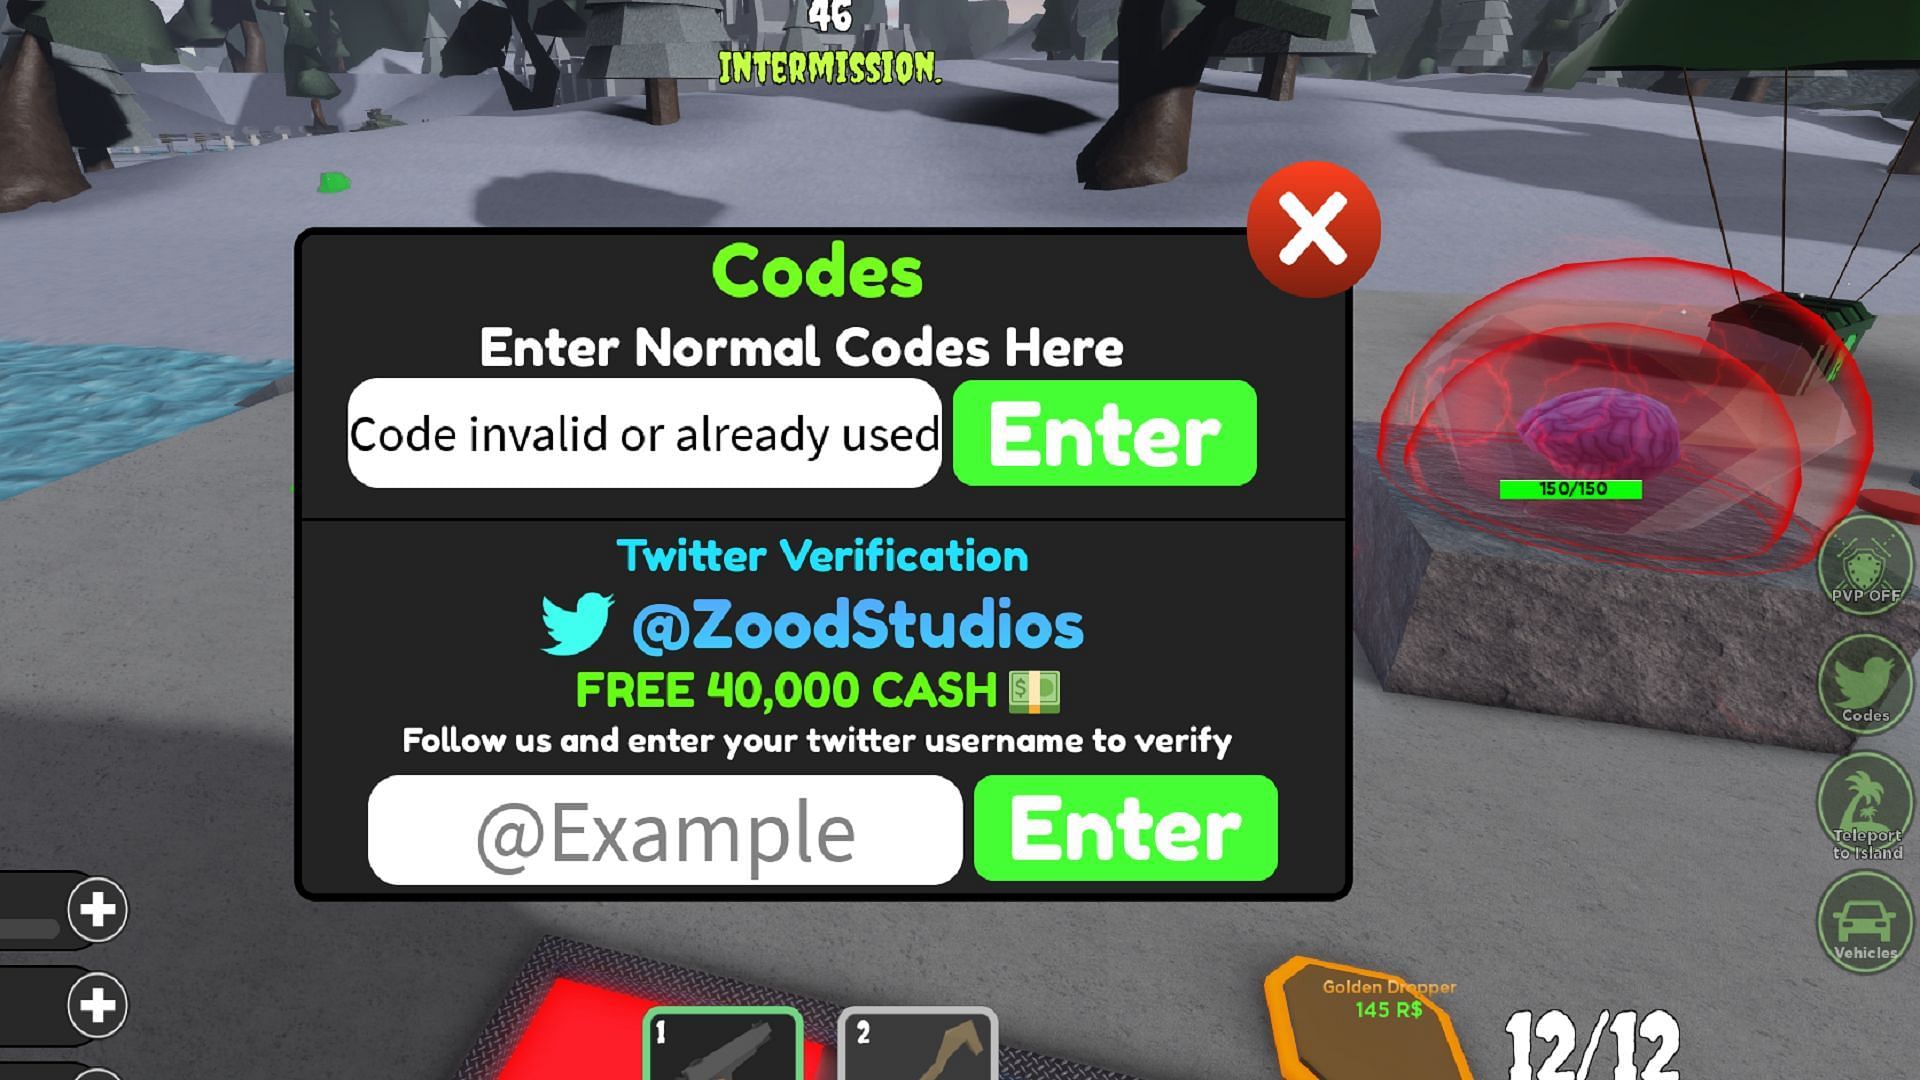 Zombie Army Simulator Codes (December 2023): Get Free…